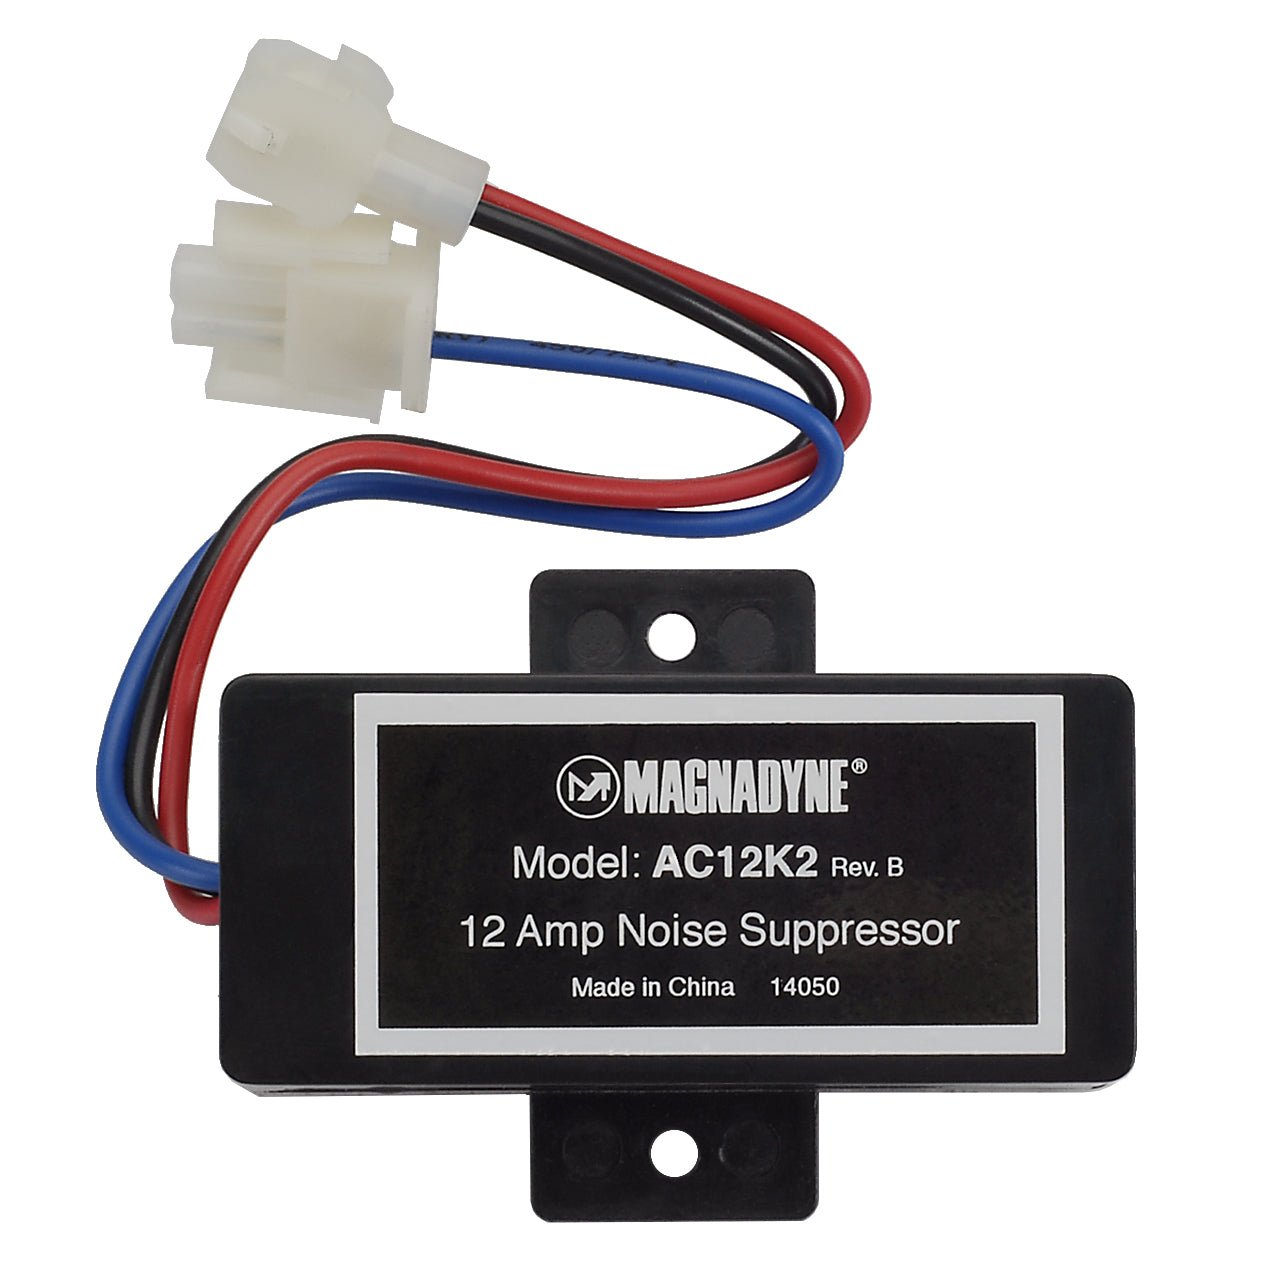 Magnadyne AC12K2 | Noise Suppressor 12 Amp High Power - Magnadyne